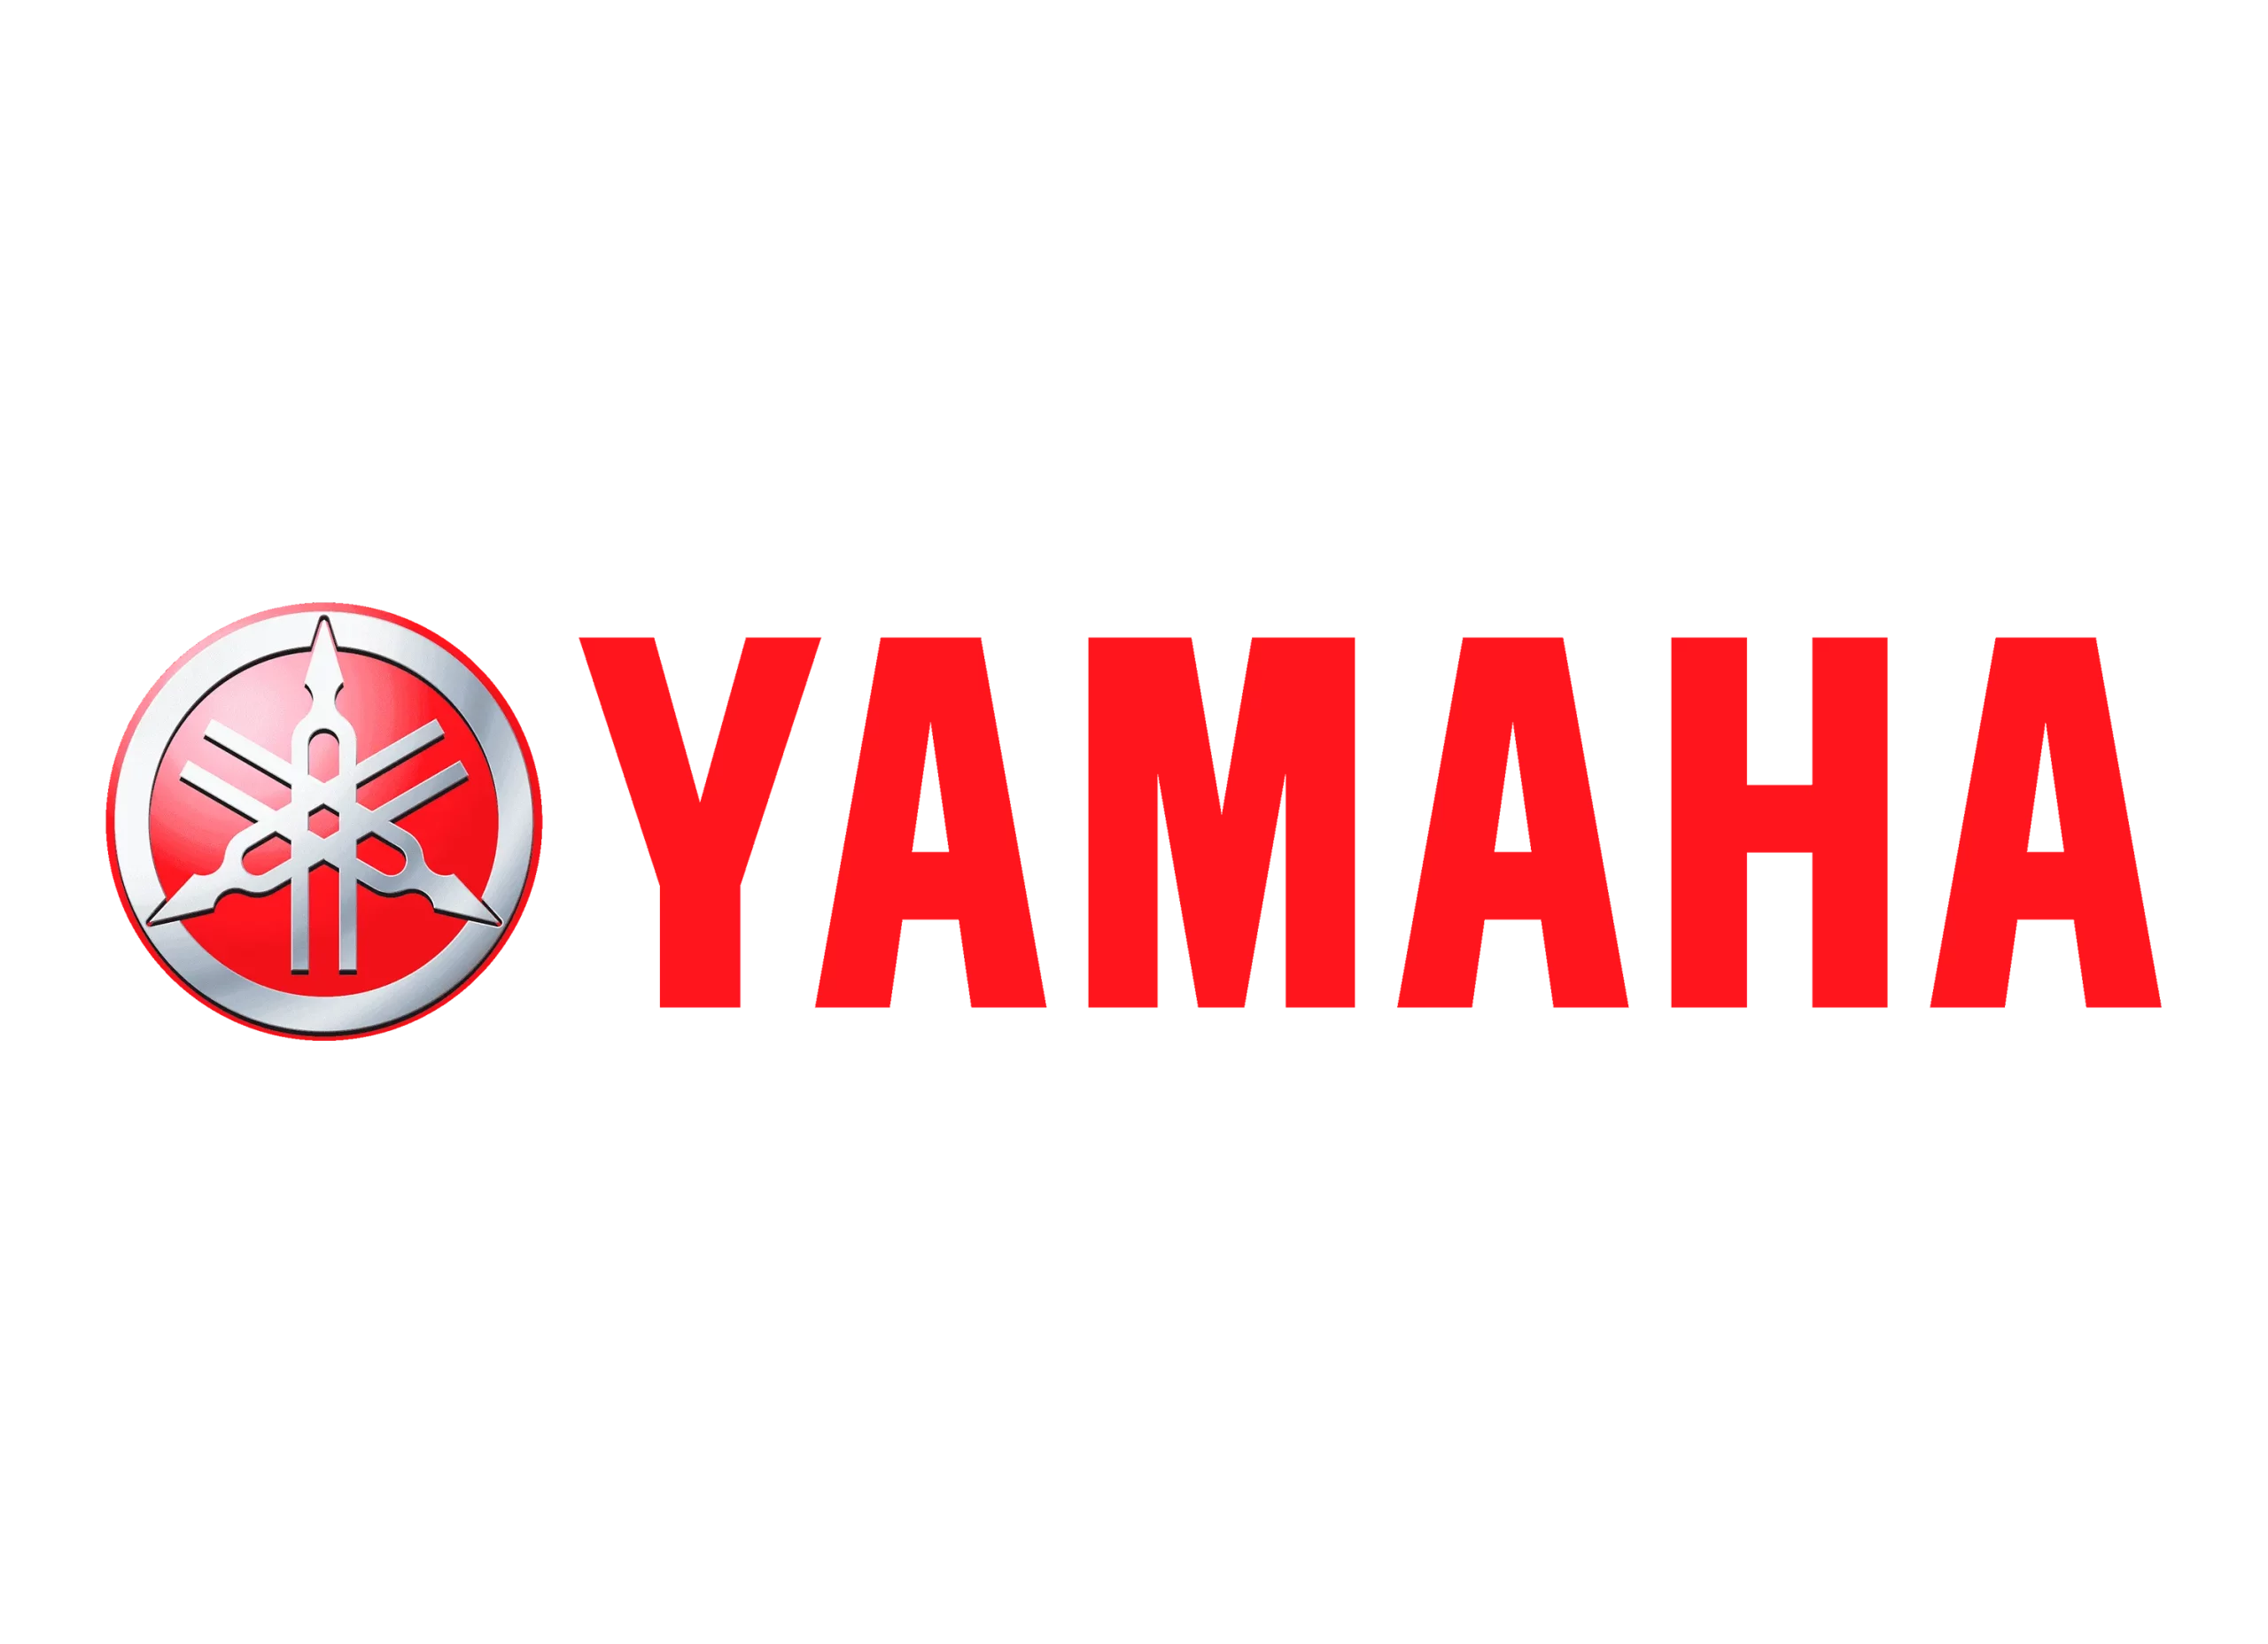 Yamaha logo 1998-present